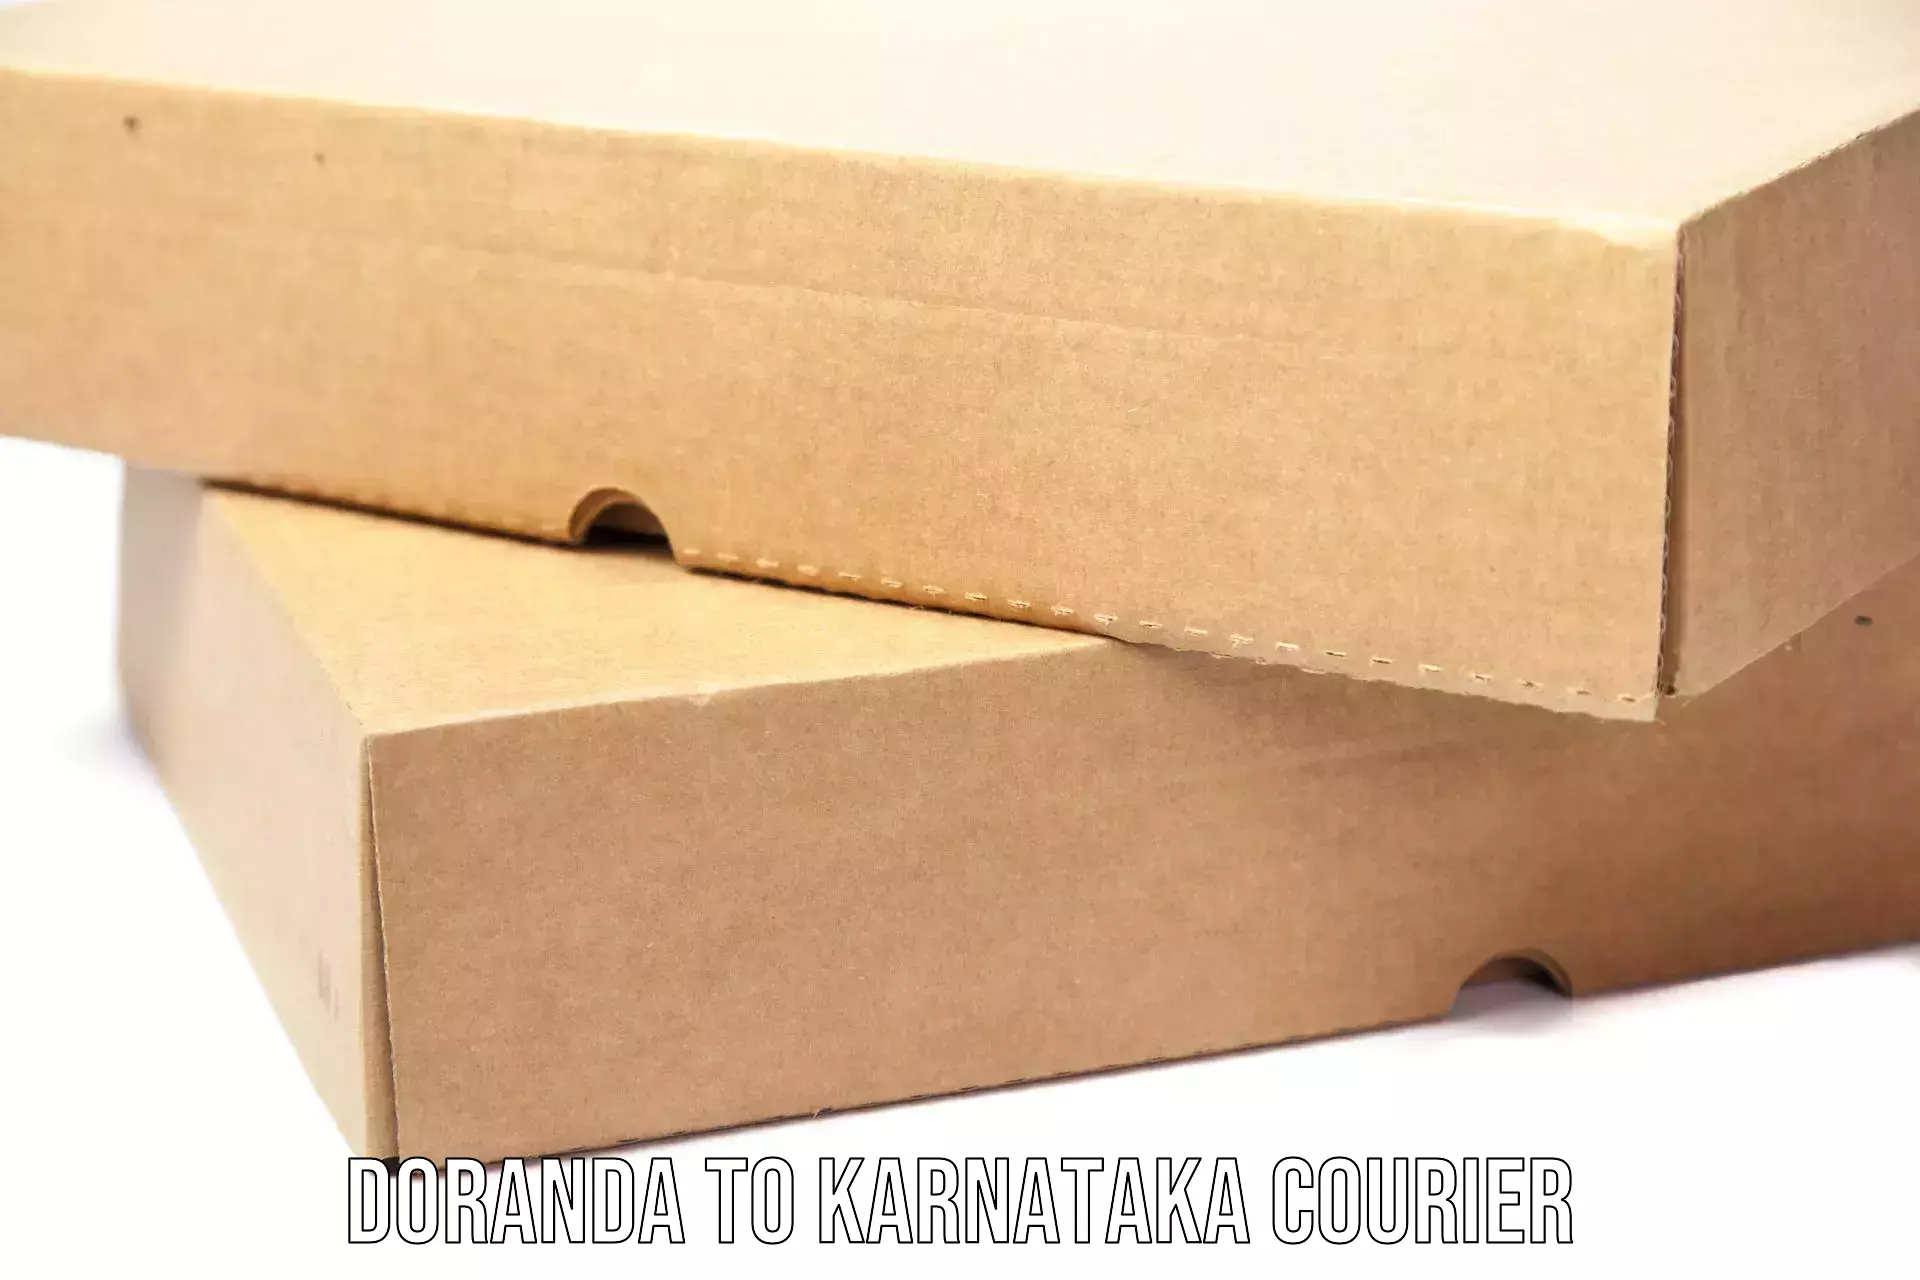 Postal and courier services Doranda to Karnataka